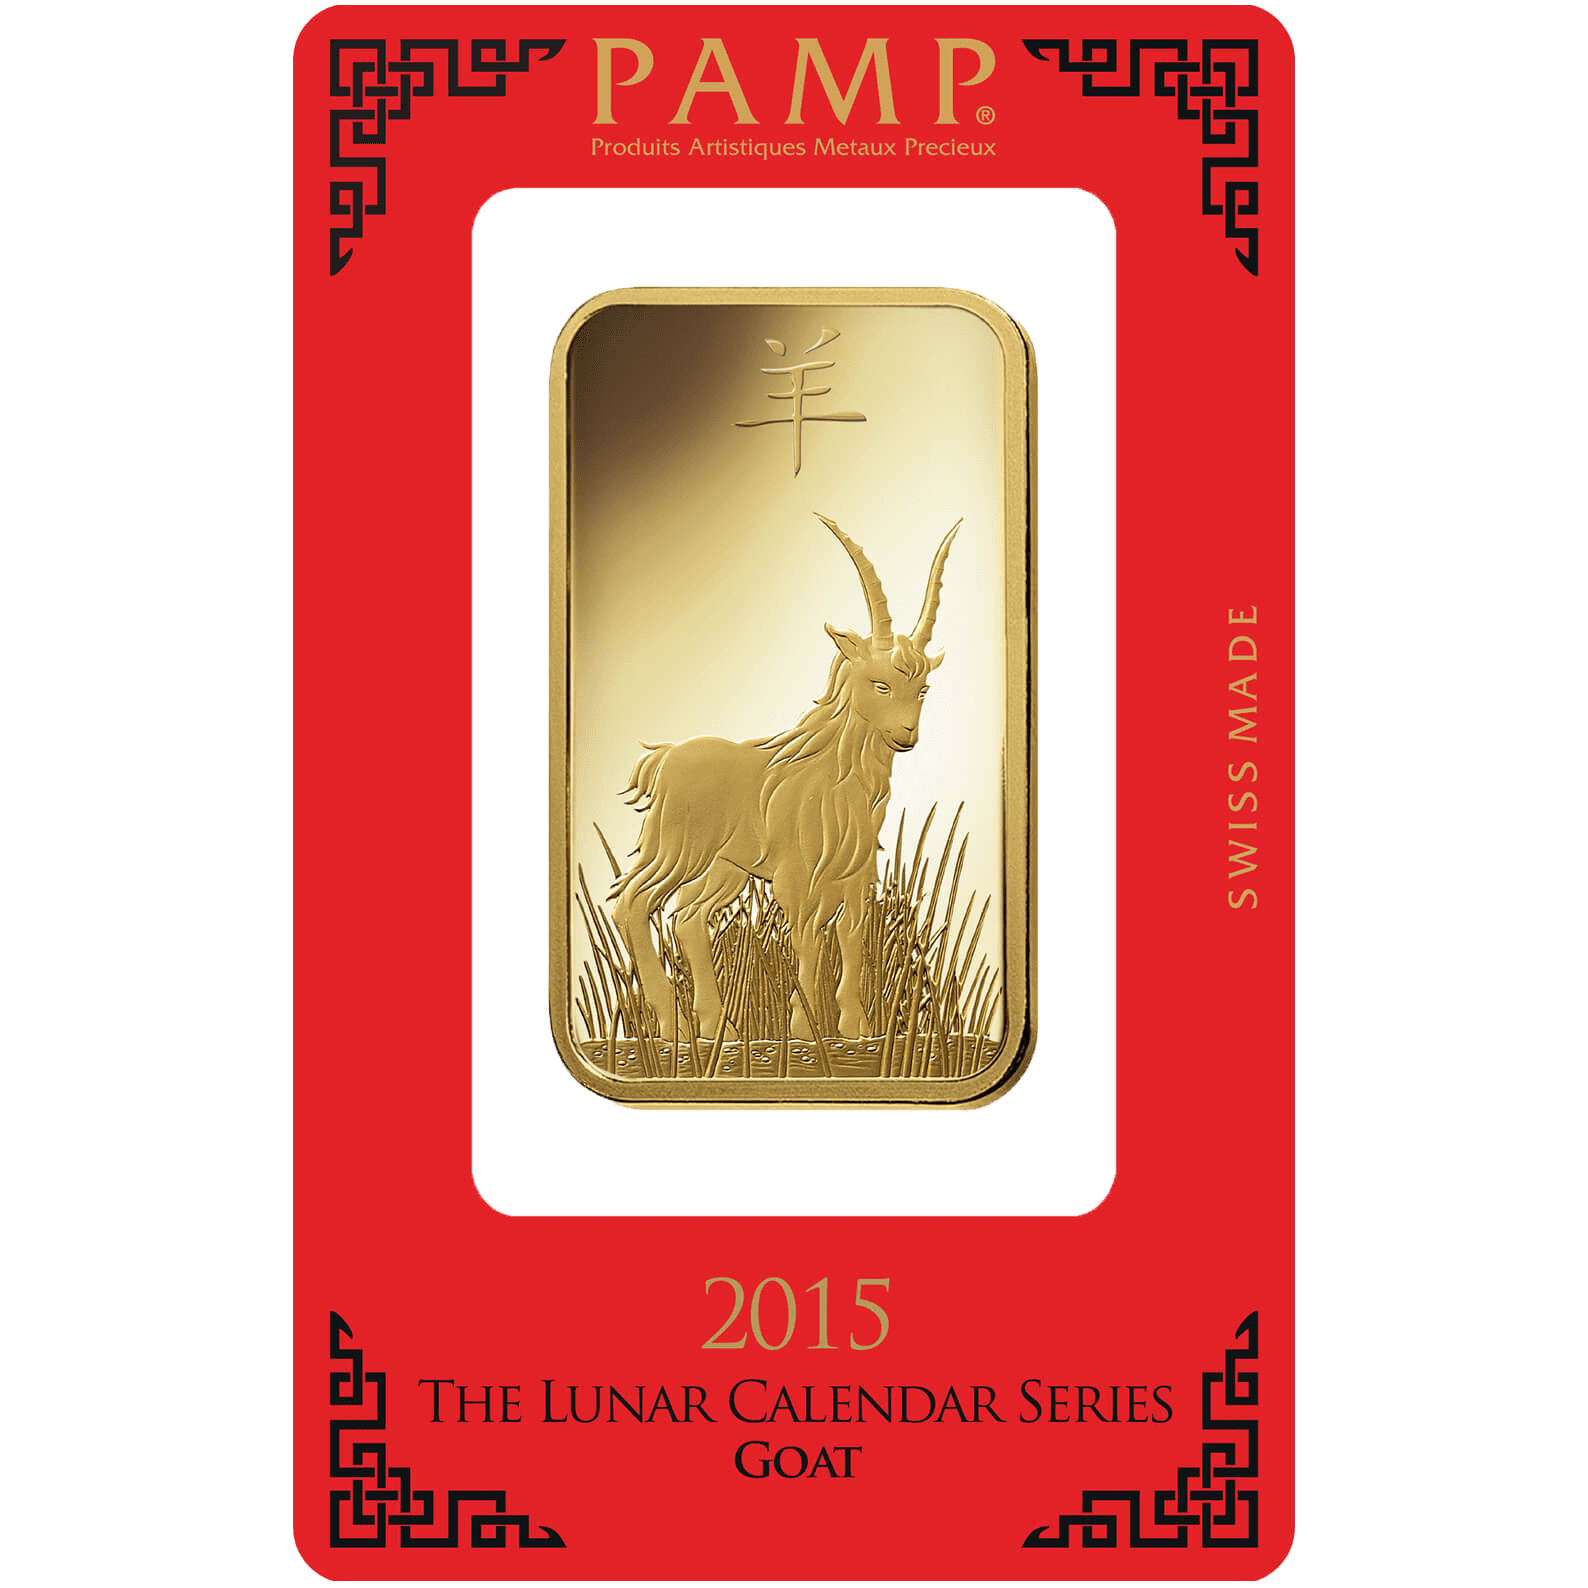 investir dans l'or, 100 gram Lingotin, Lingot d'or pur Lunar Chèvre - PAMP Suisse - Pack Front